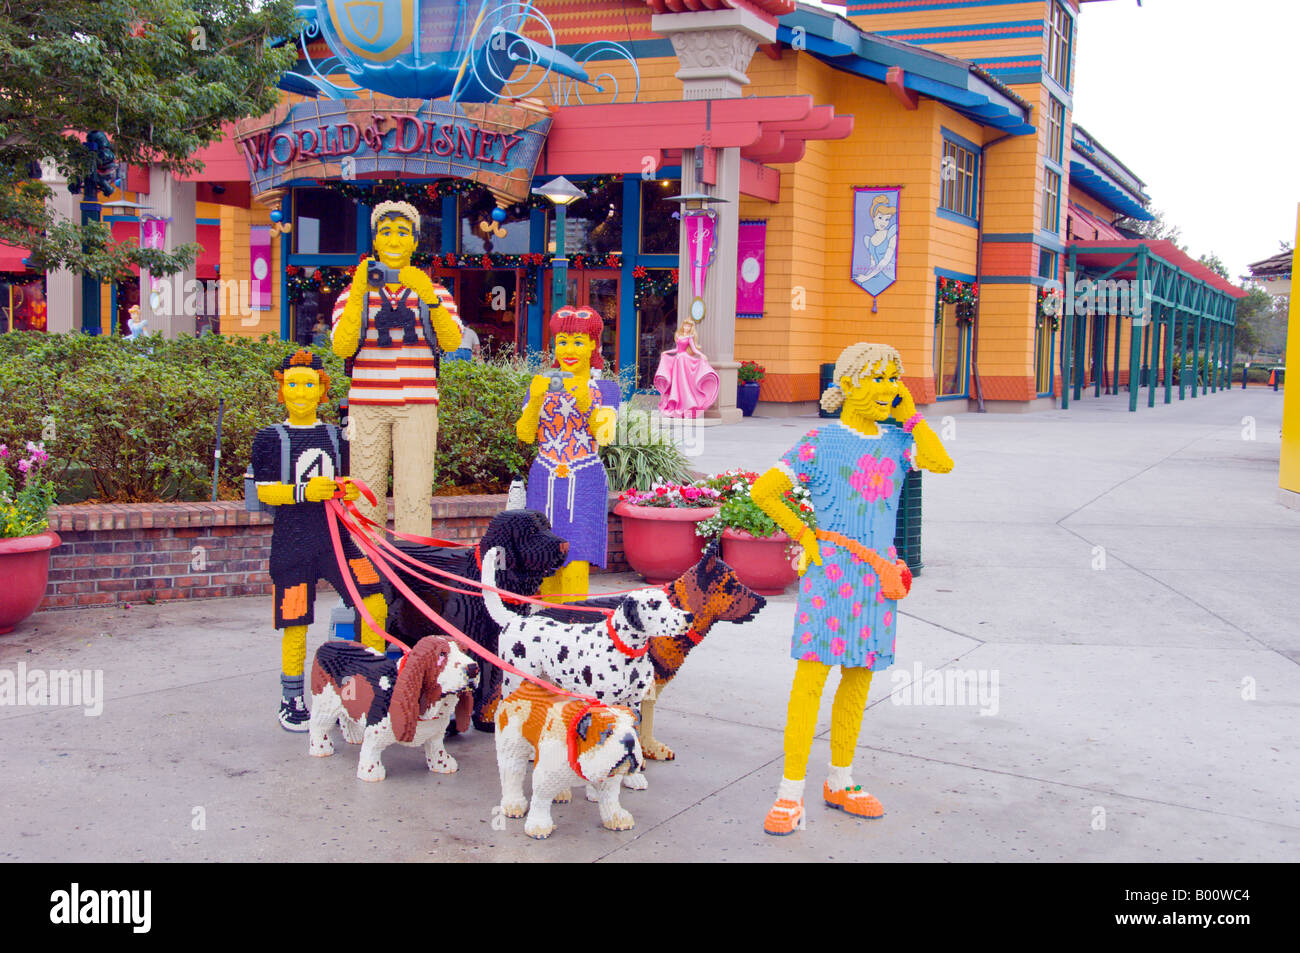 Lego display in Downtown Disney in Orlando Florida USA Stock Photo - Alamy